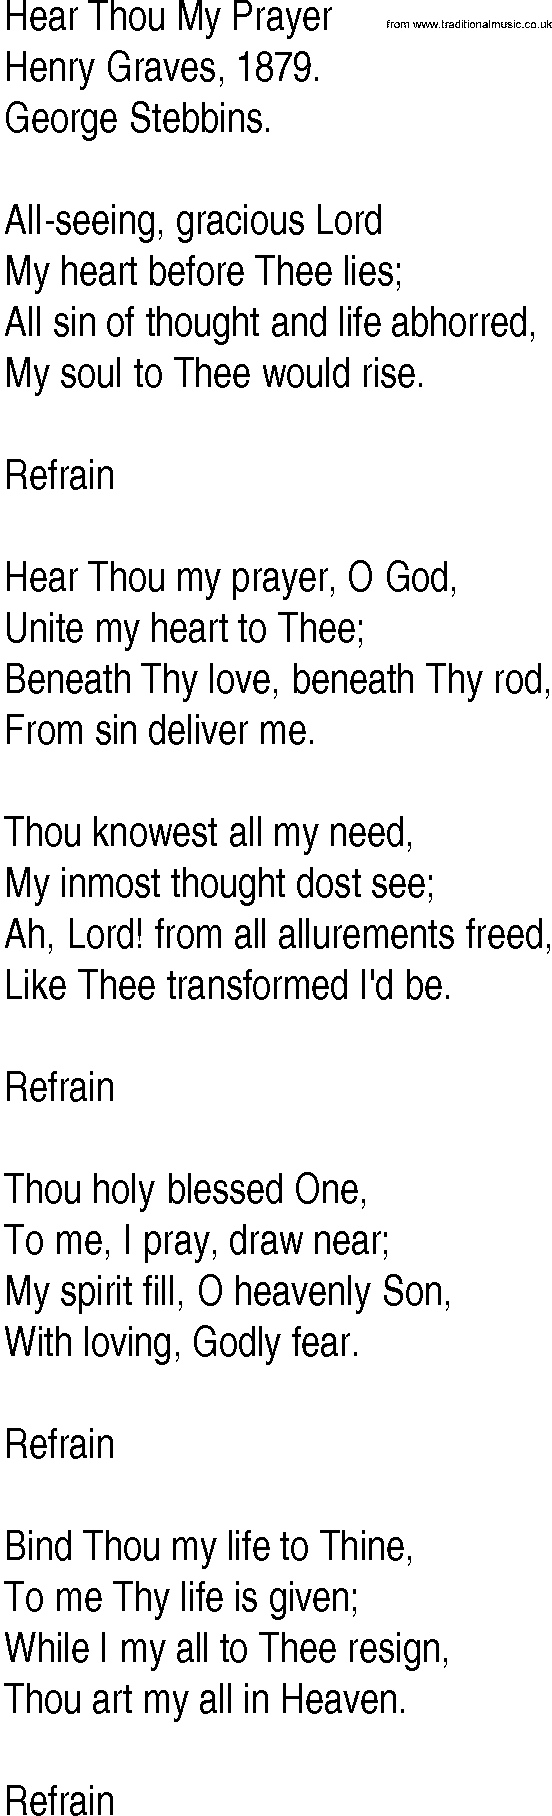 Hymn and Gospel Song: Hear Thou My Prayer by Henry Graves lyrics